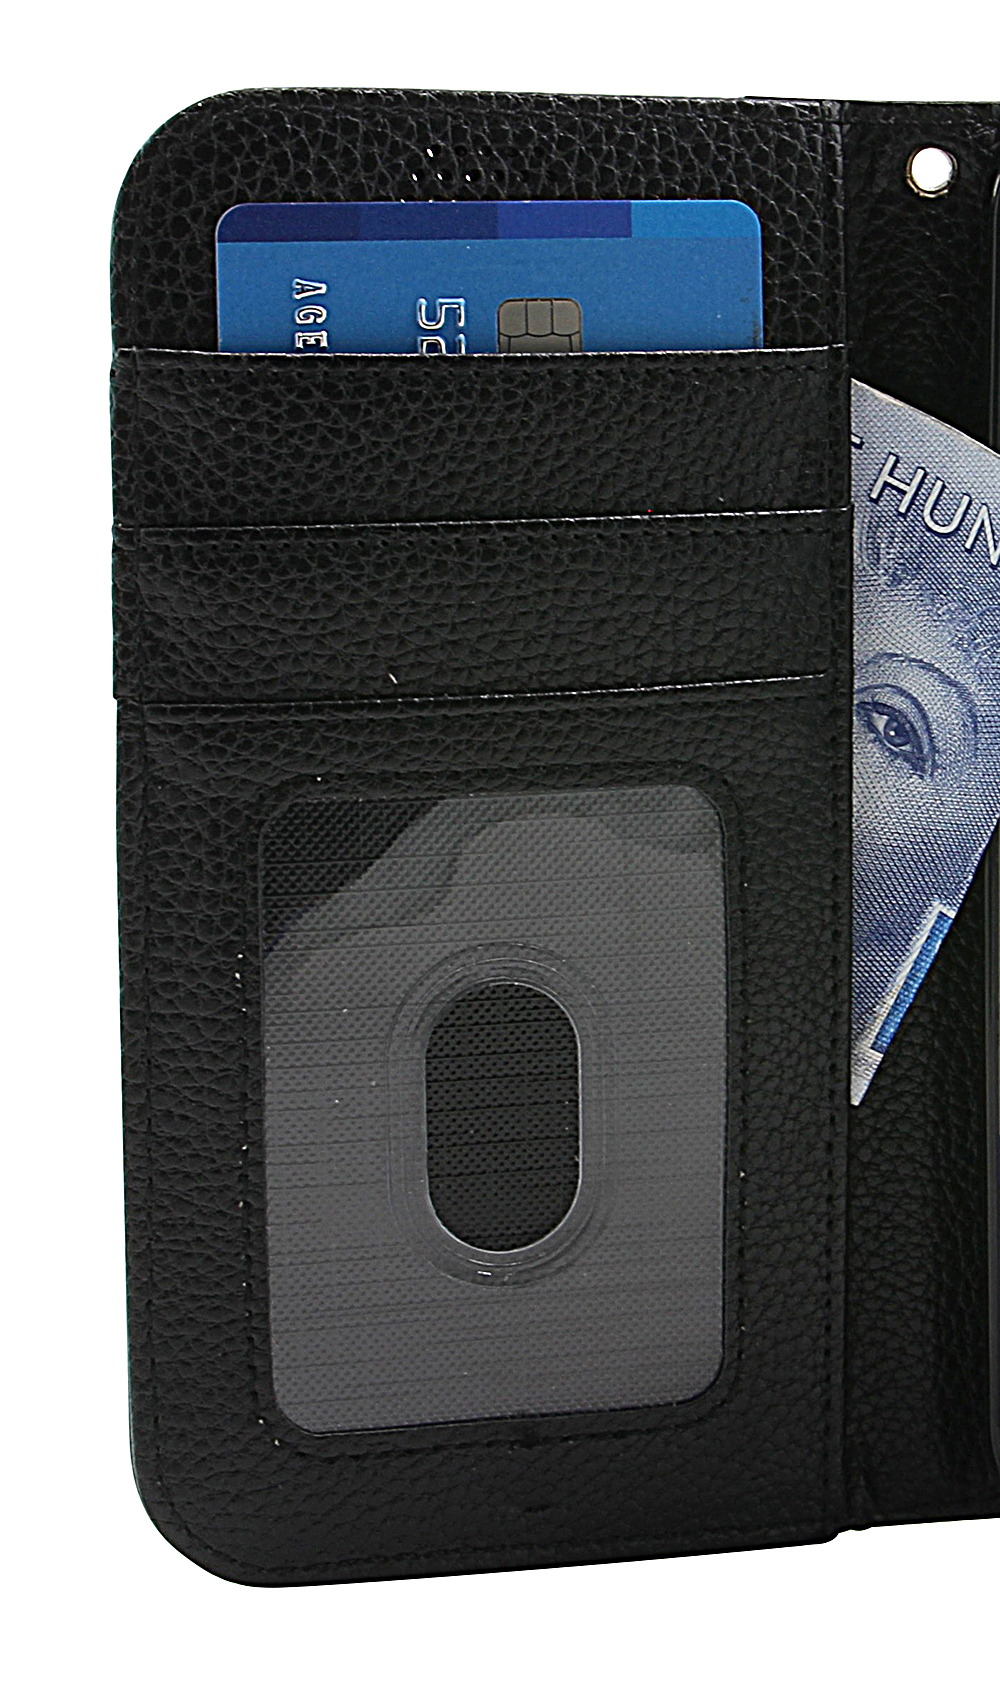 billigamobilskydd.seNew Standcase Wallet Sony Xperia 10 Plus